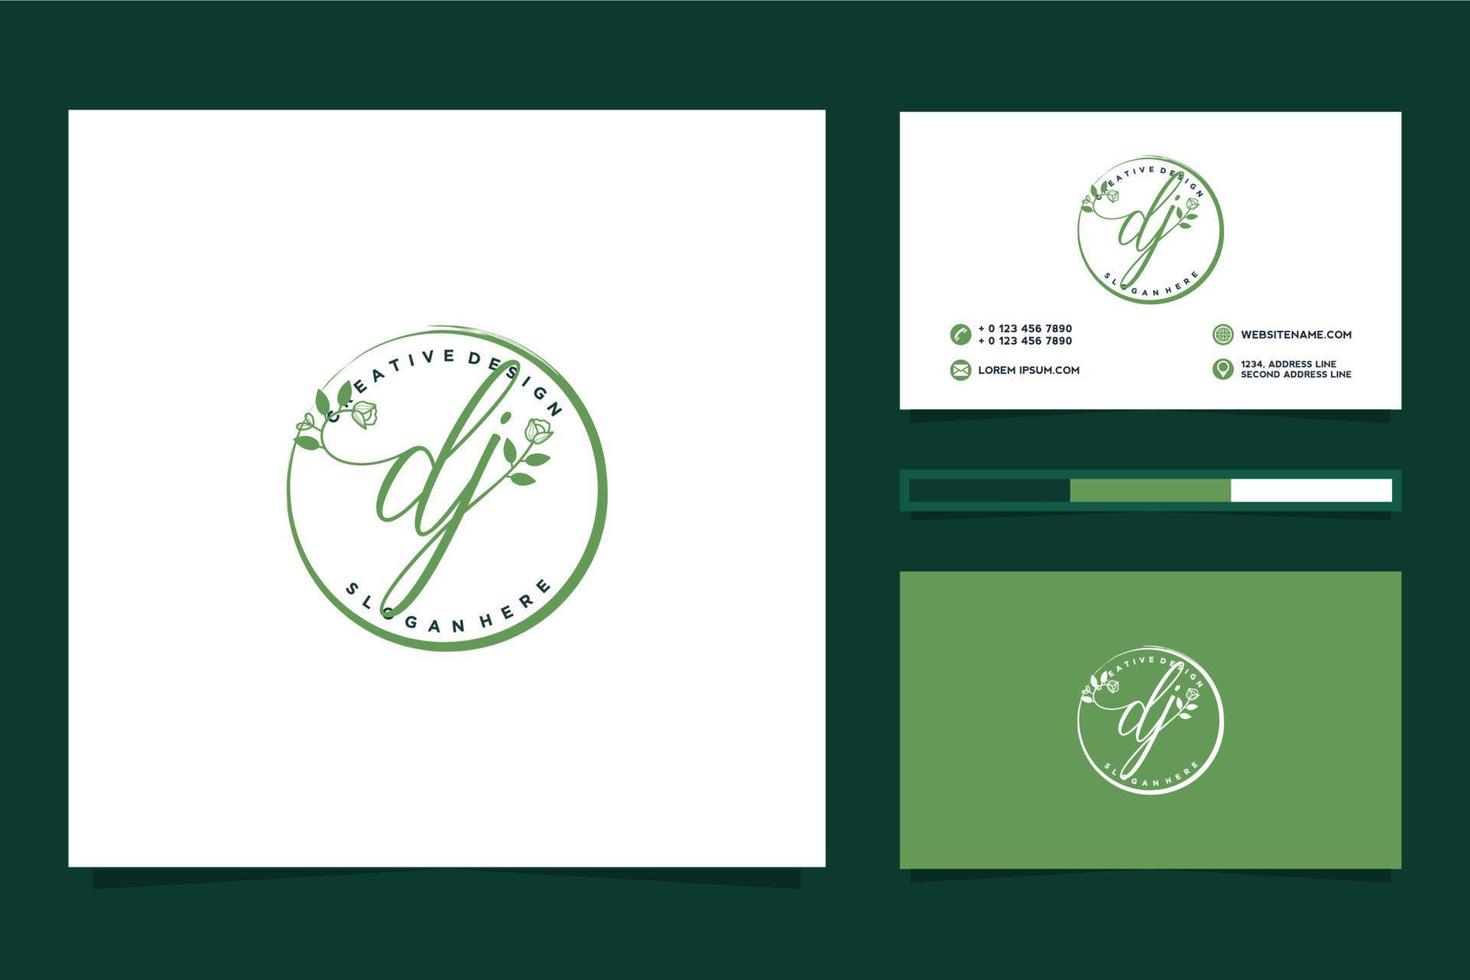 Initial DJ Feminine logo collections and business card templat Premium Vector